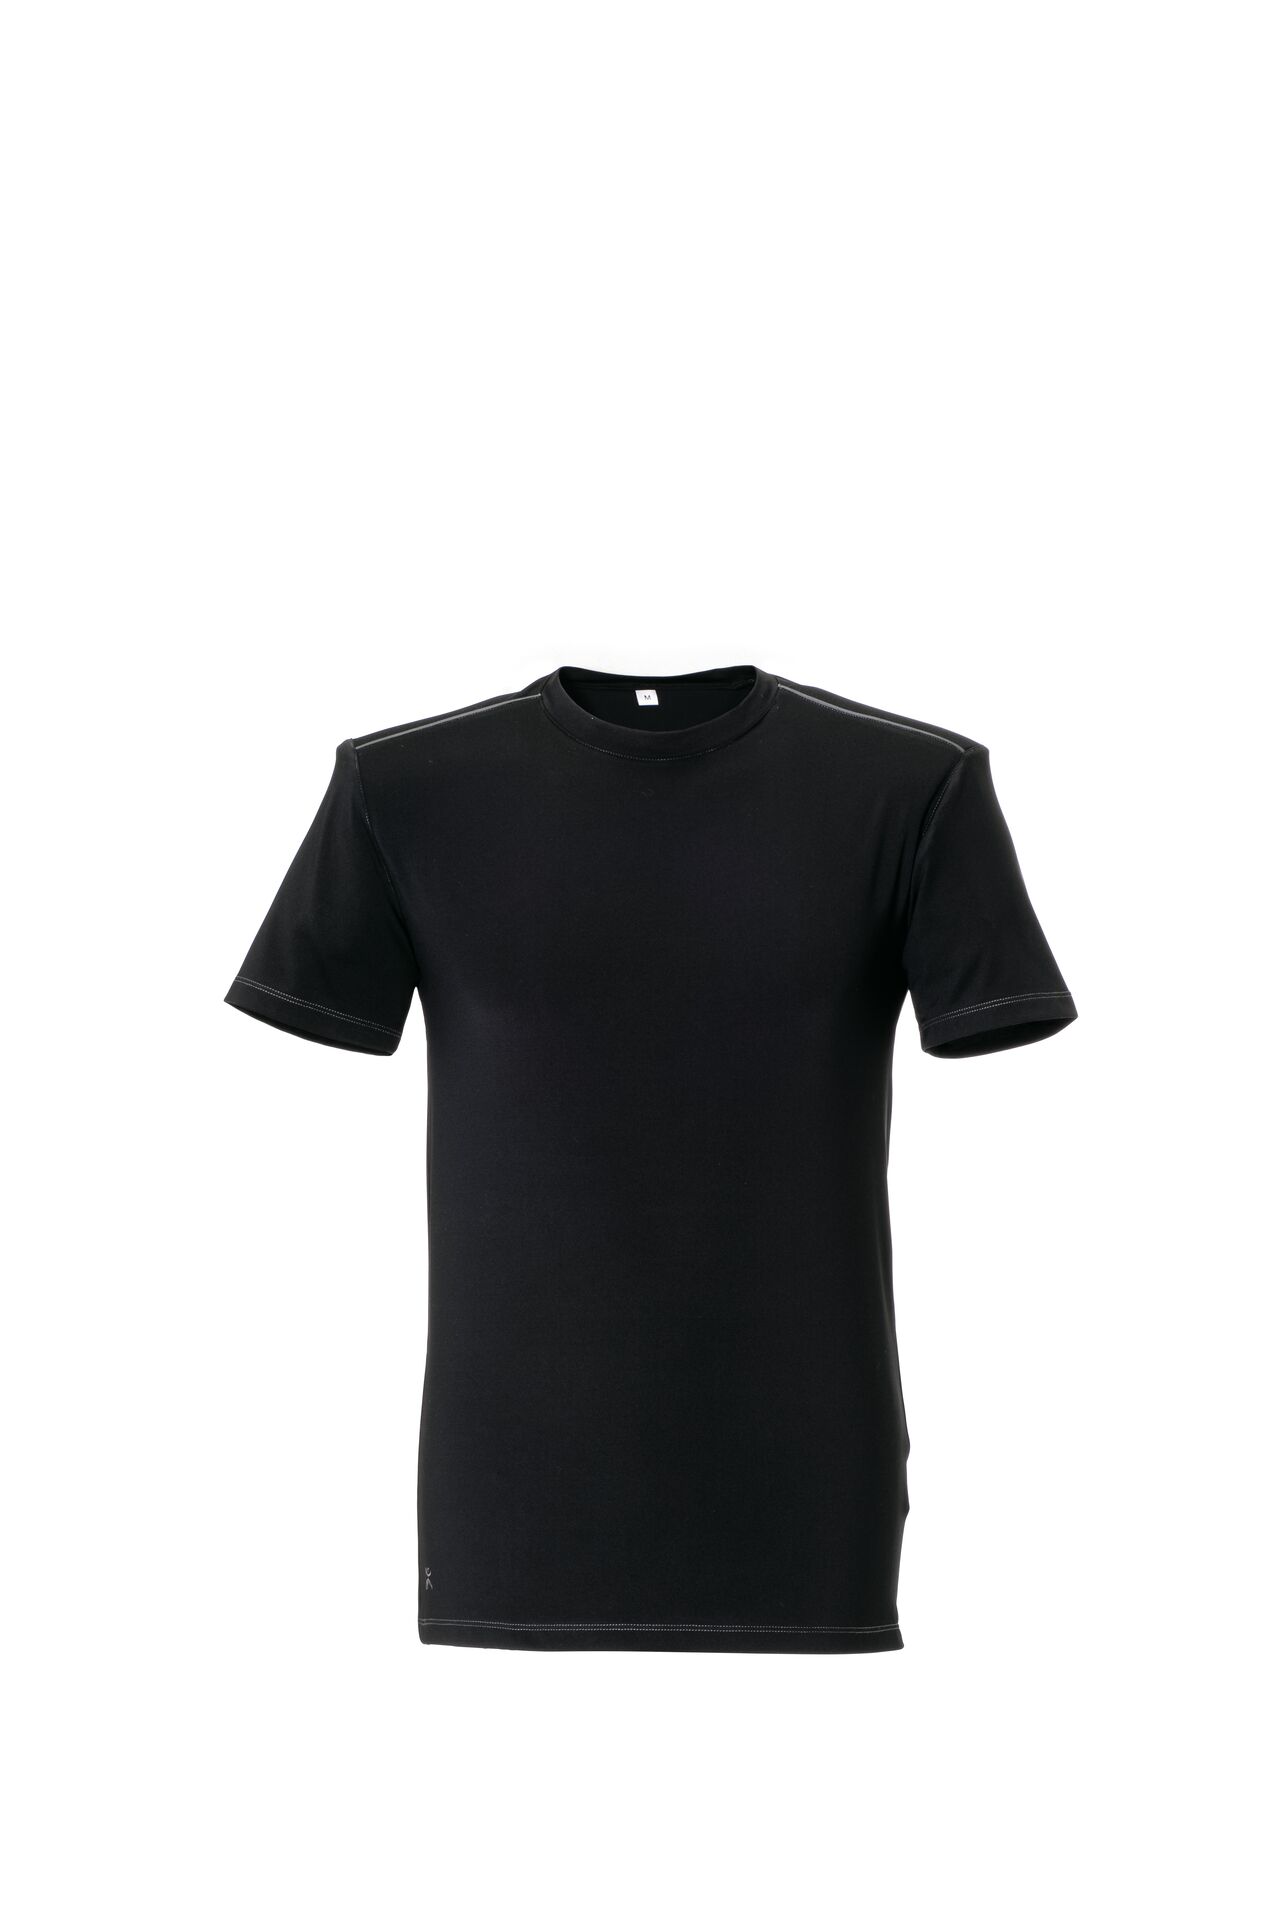 Planam® - DuraWork T-Shirt